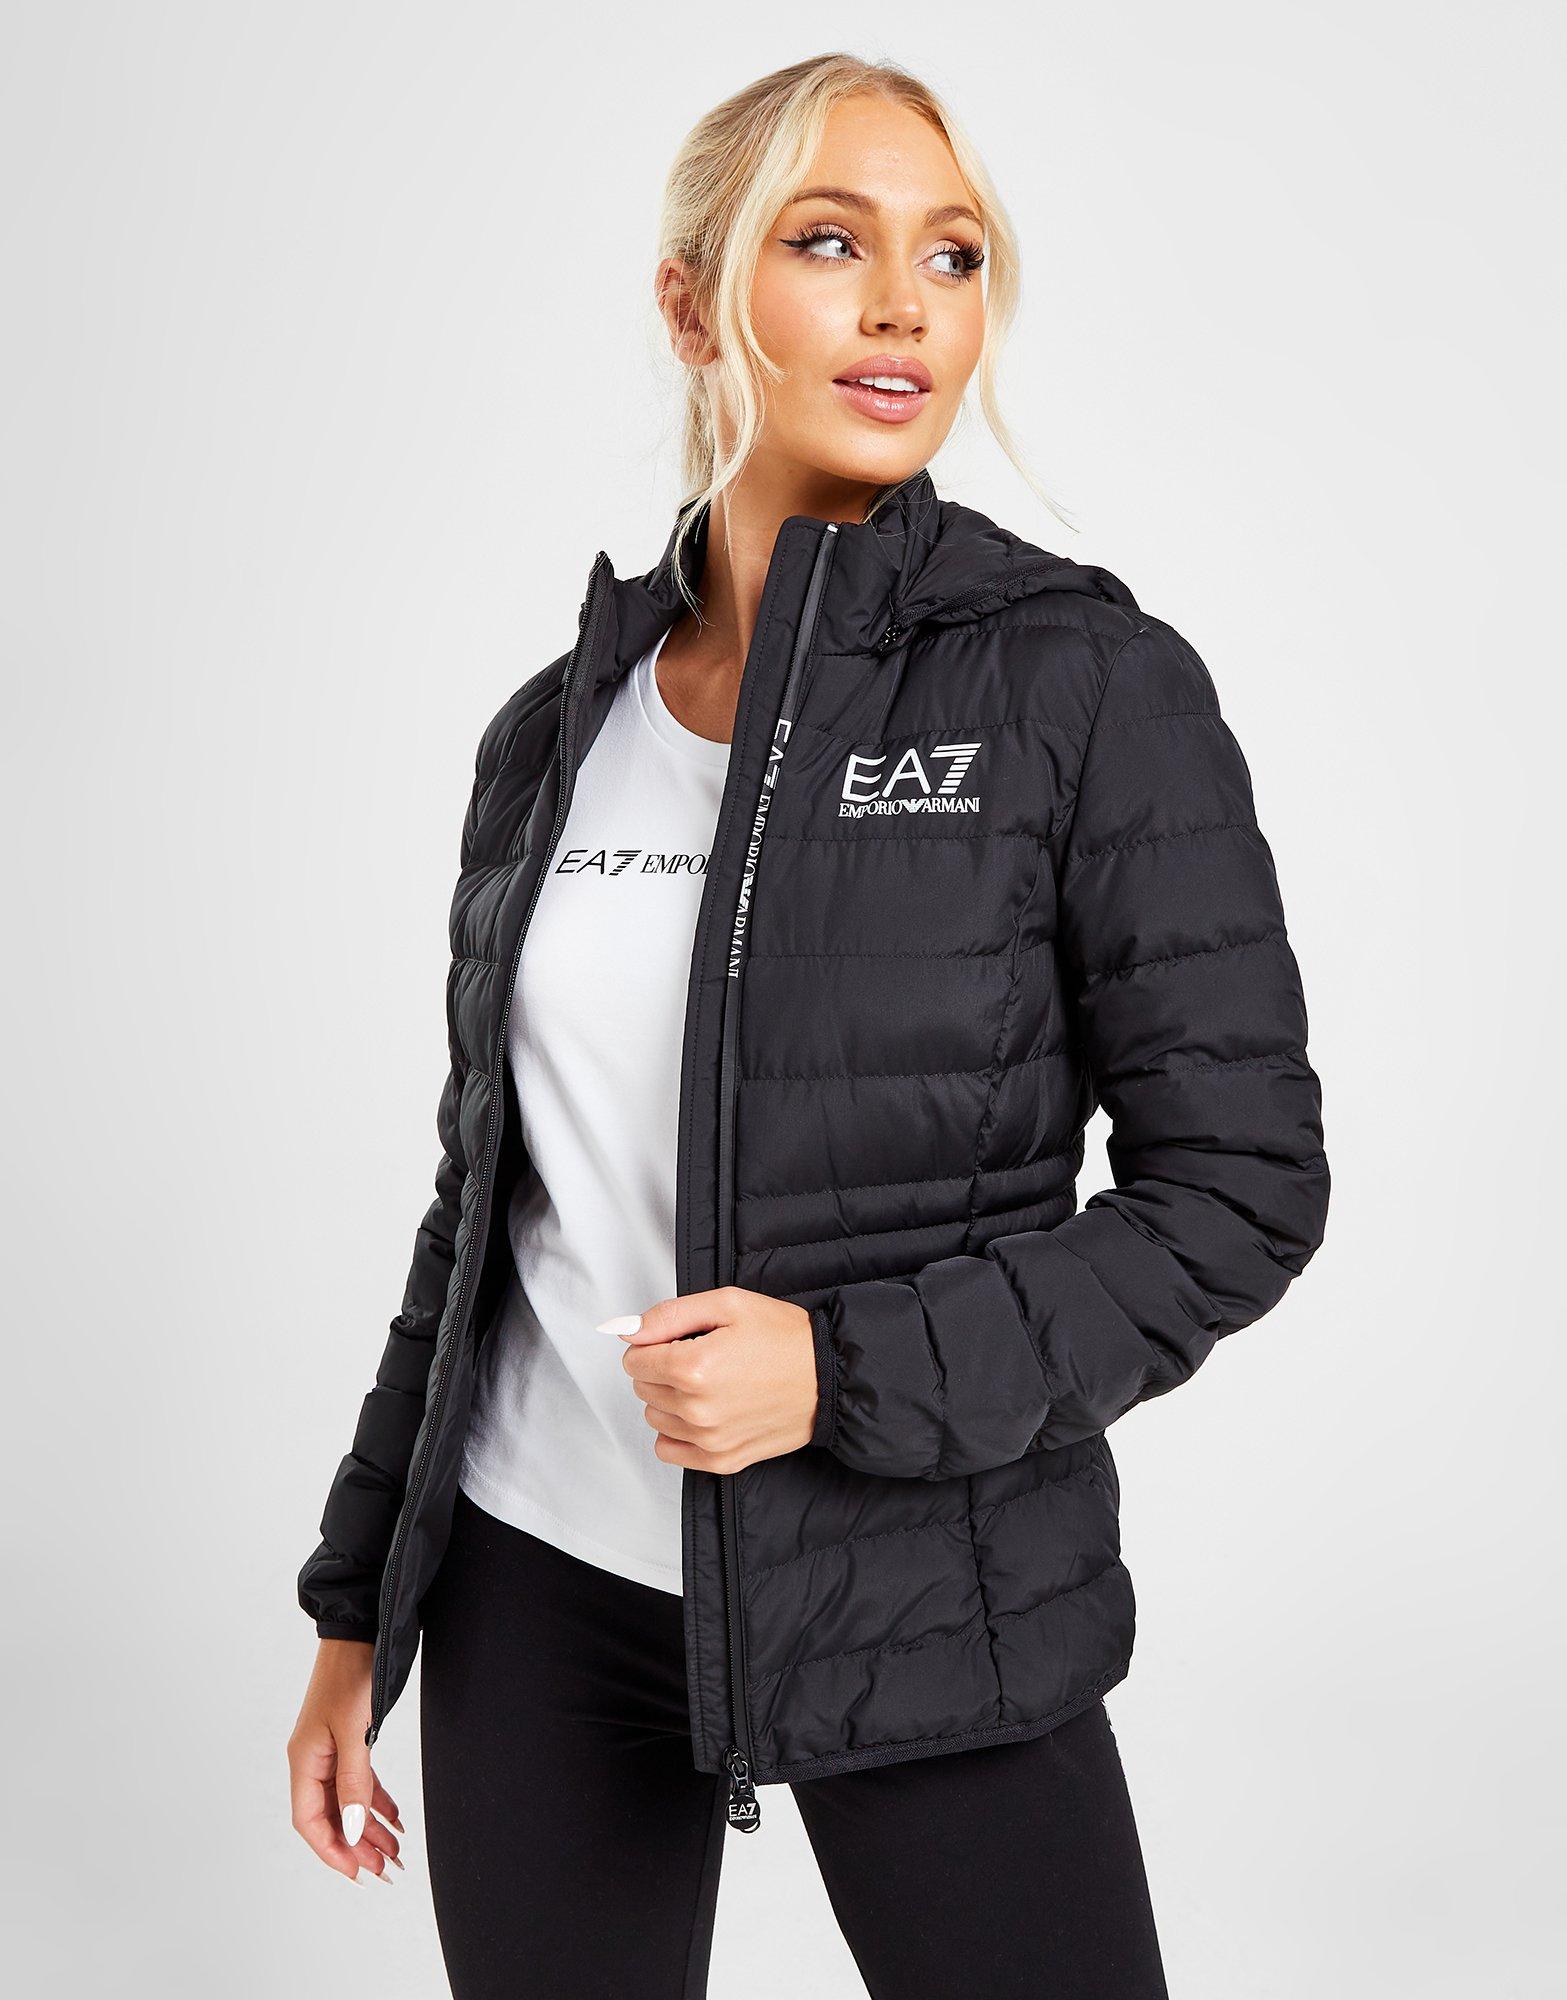 Vleien pepermunt Bourgeon Buy Black Emporio Armani EA7 Logo Zip Jacket